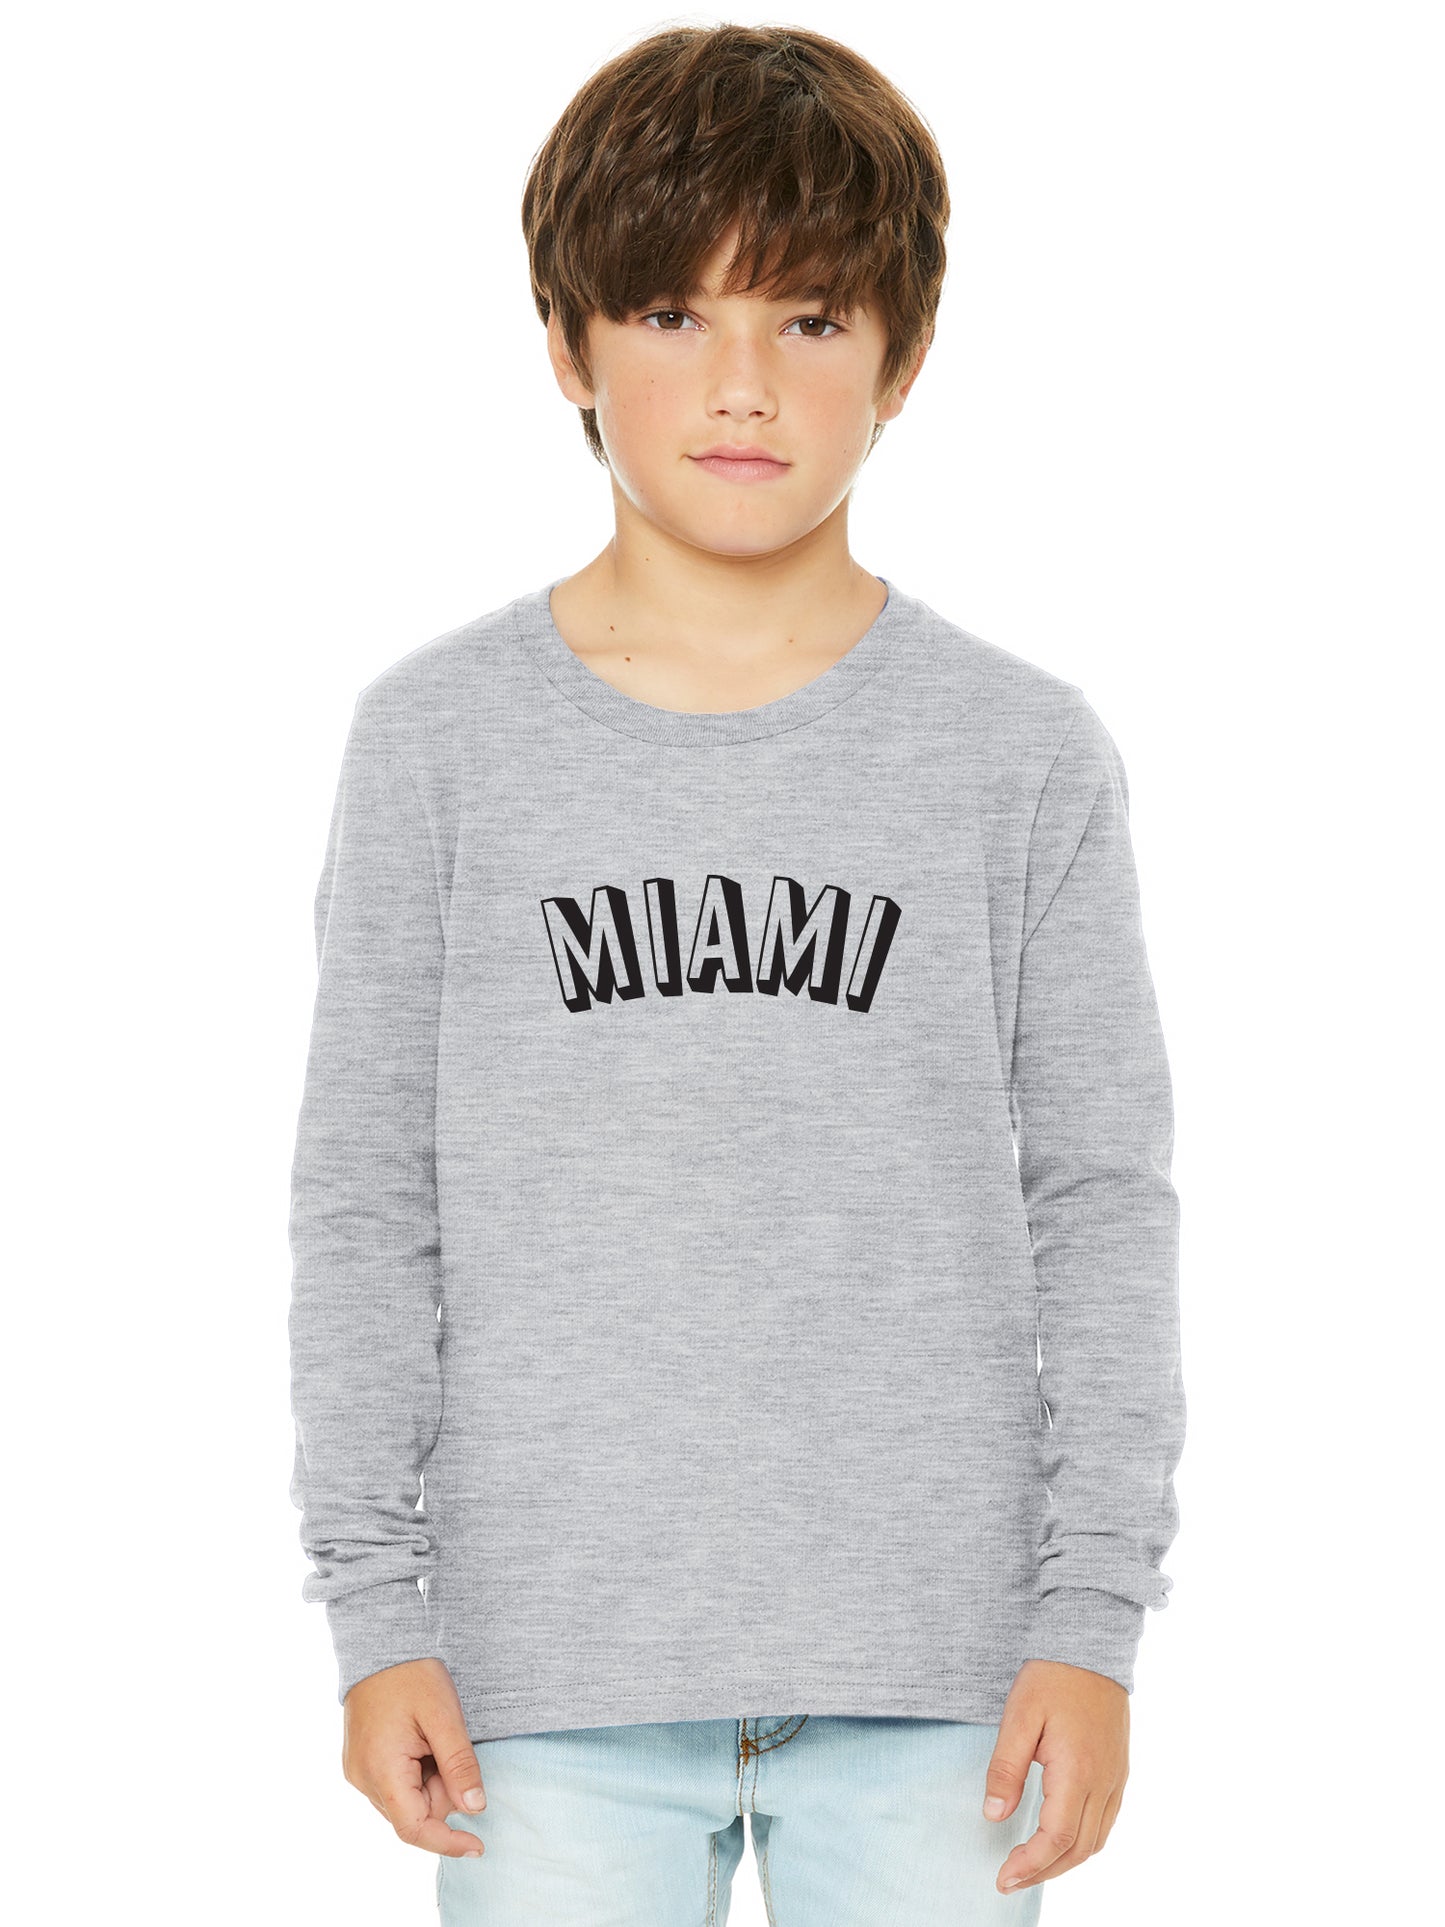 Daxton Youth Long Sleeve Miami Basic Tshirt